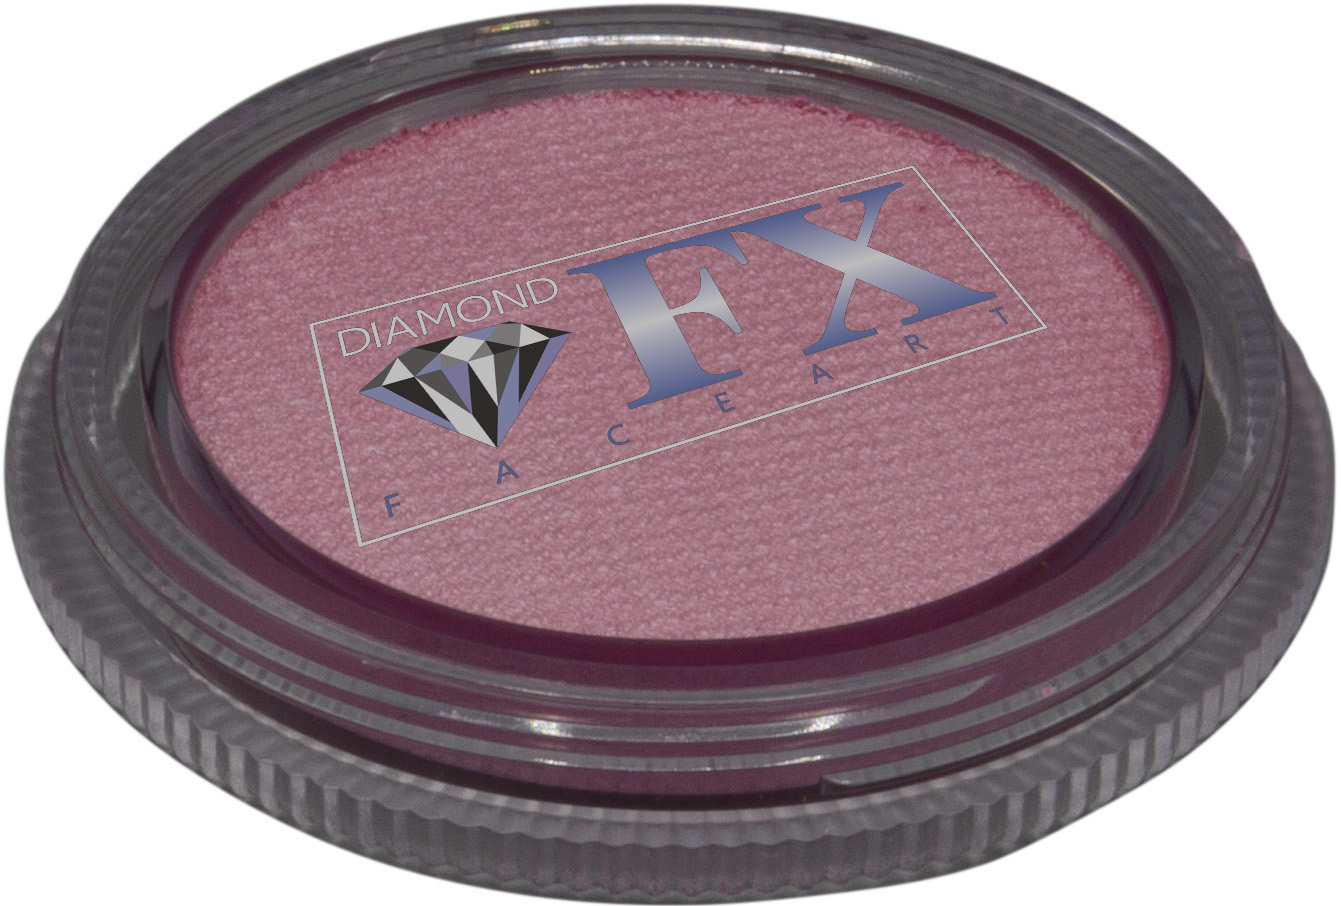 Diamond FX Mellow Pink Metallic 30g - Small Image